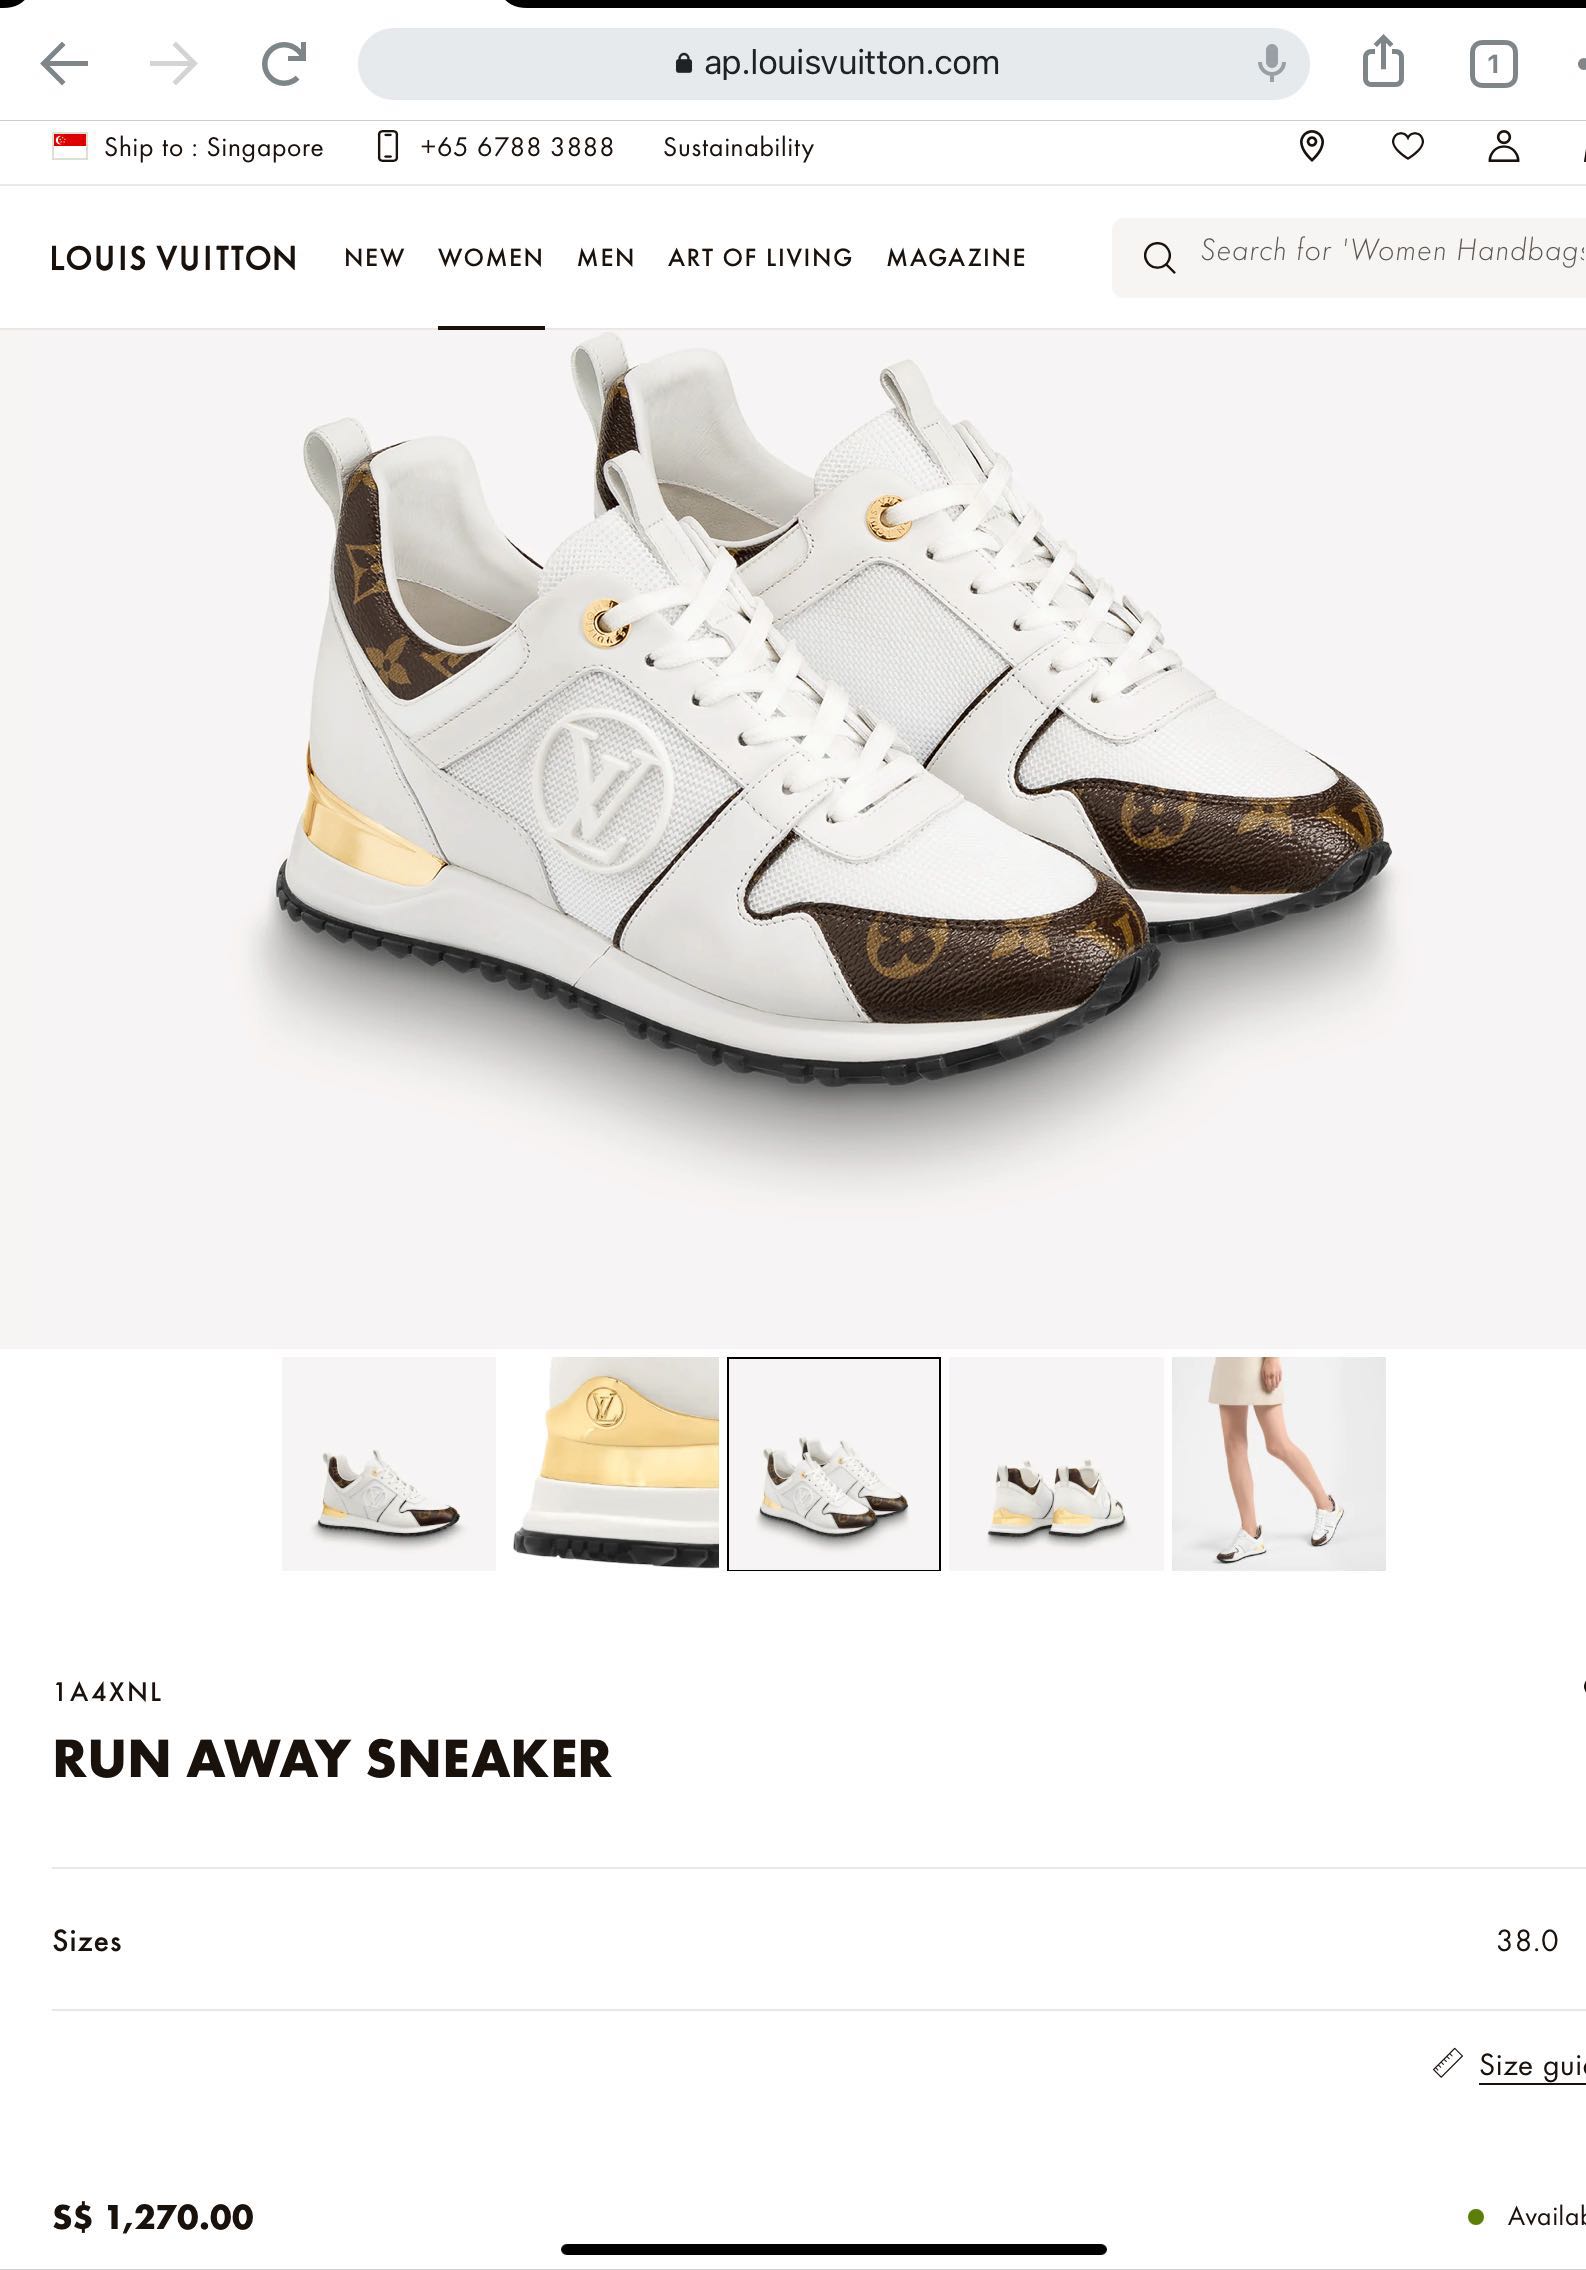 Run Away Sneaker in White - Shoes 1A4XNL, LOUIS VUITTON ®